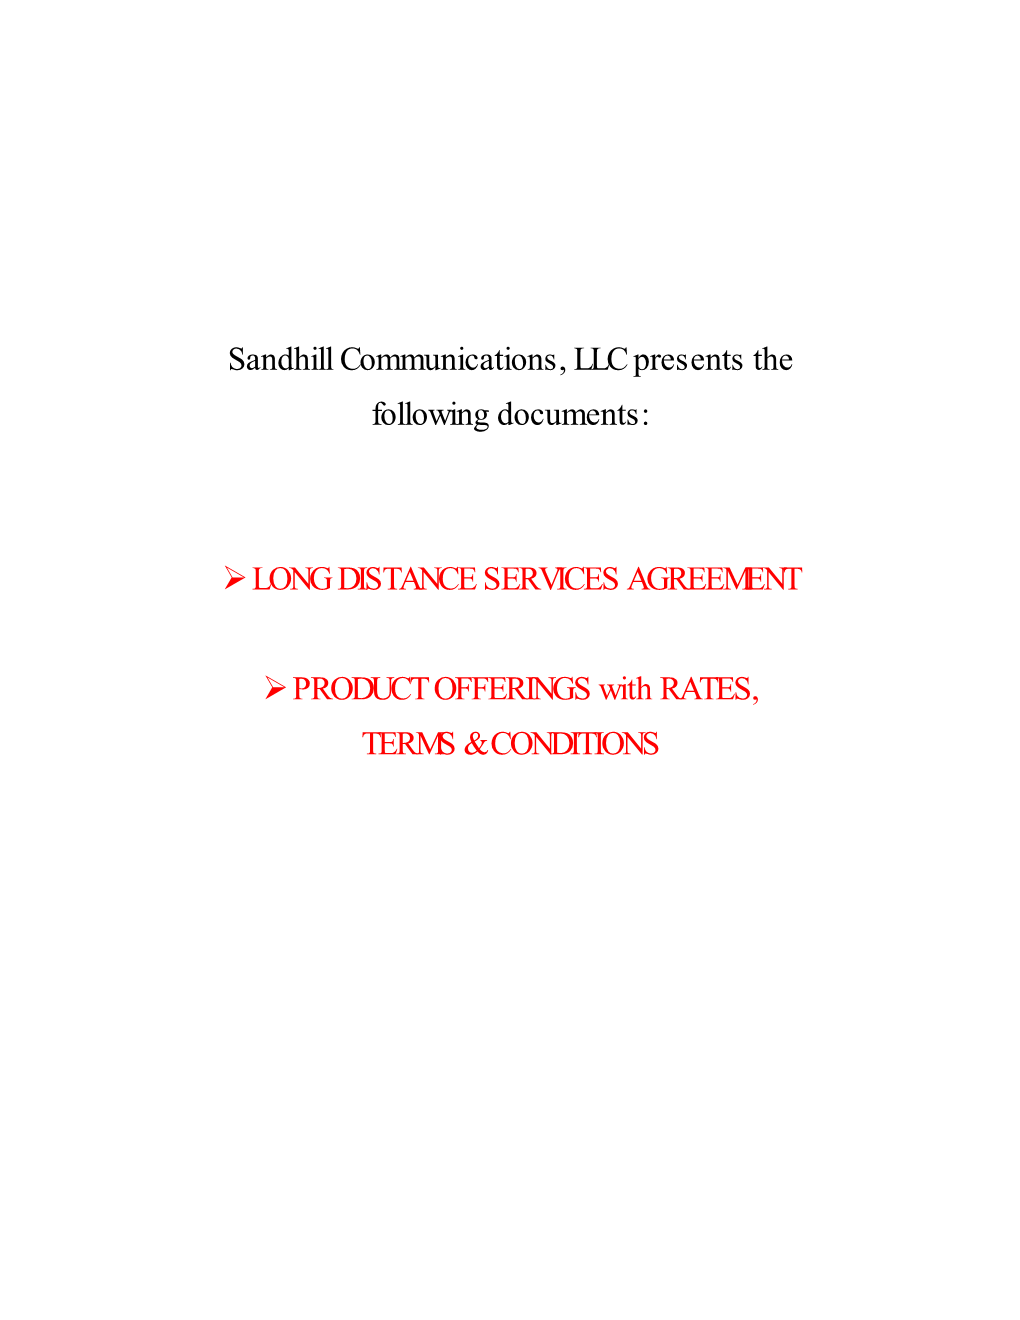 Sandhill Communications, LLC Presents the Following Documents